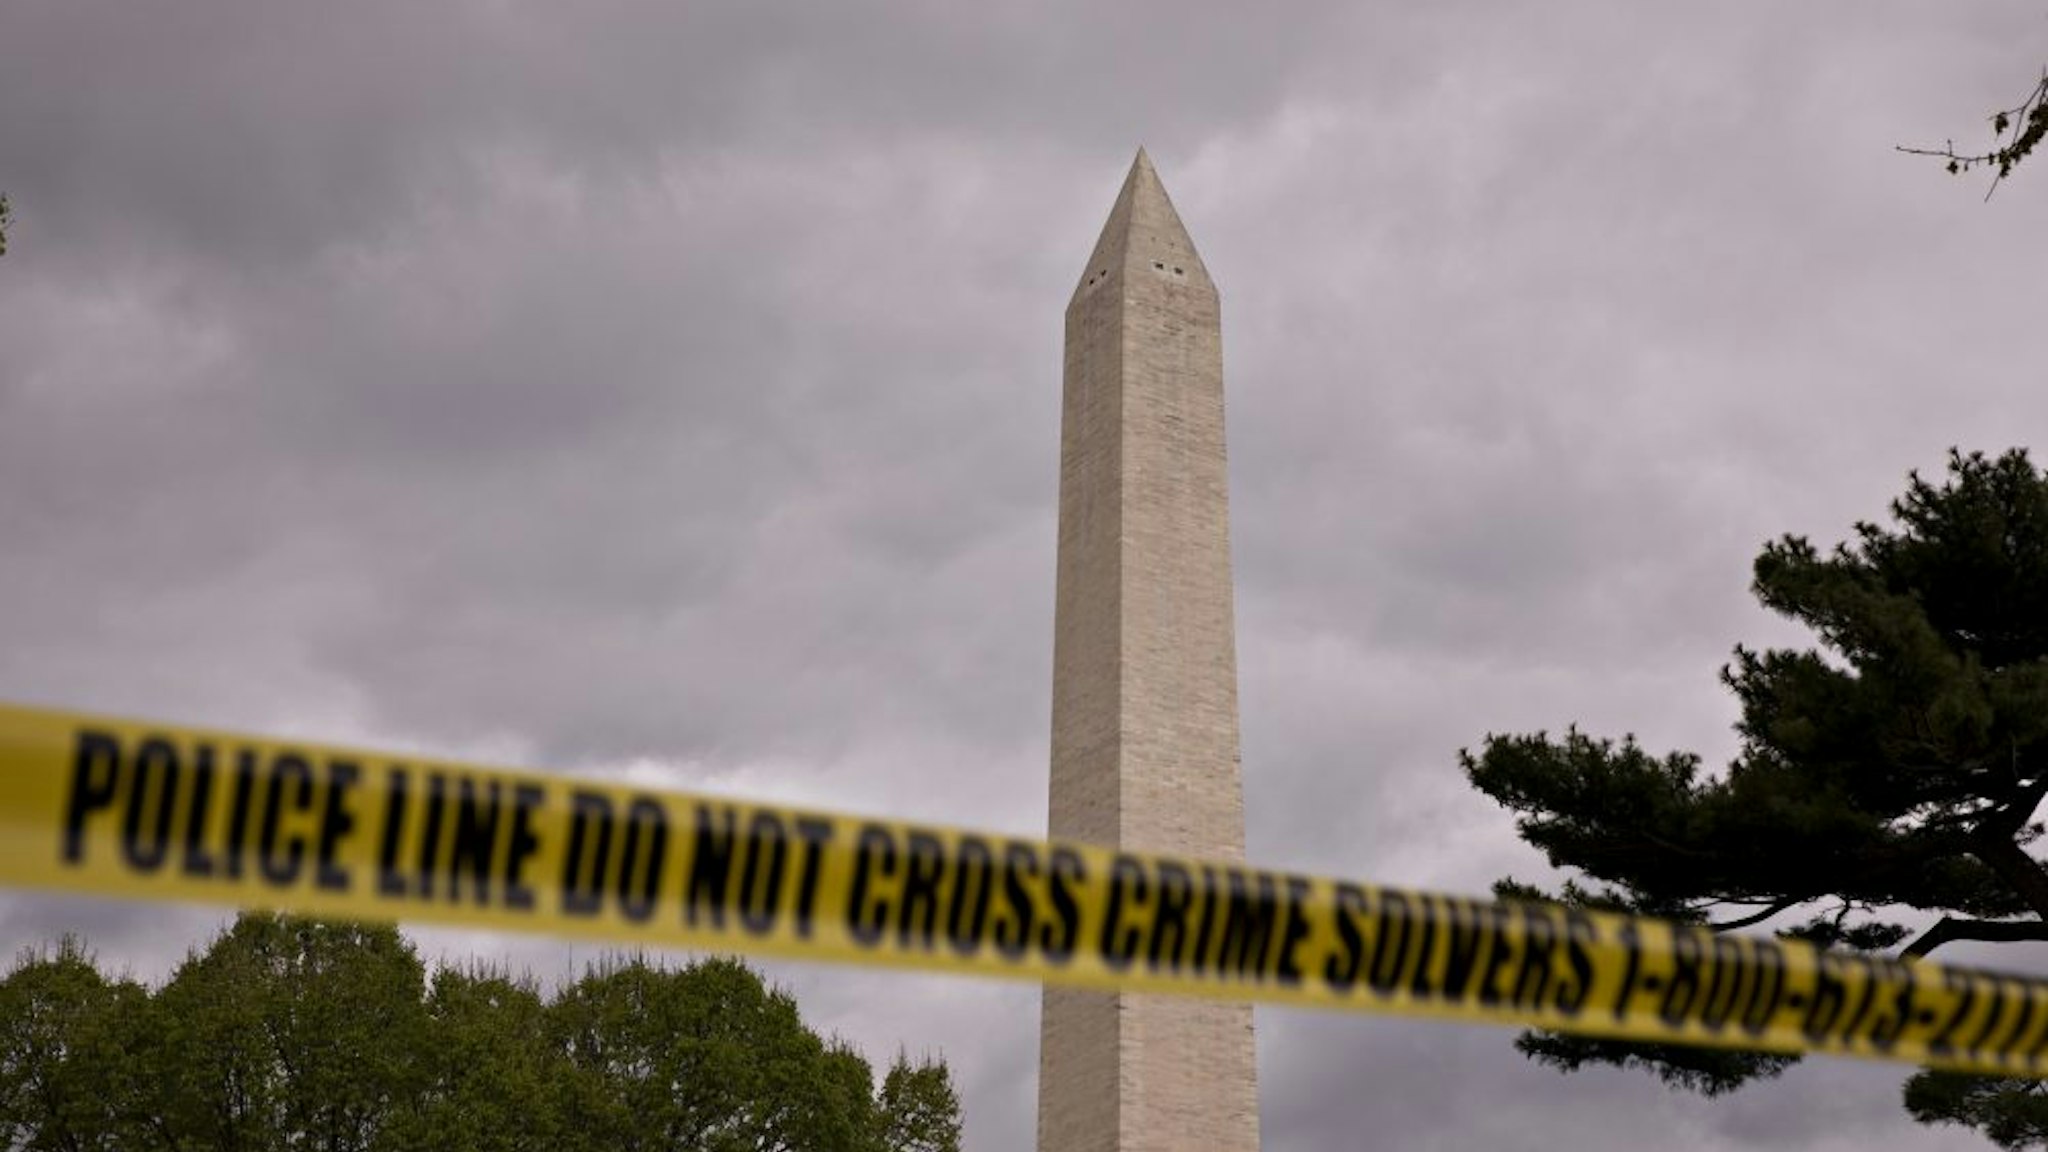 Washington Monument police tape